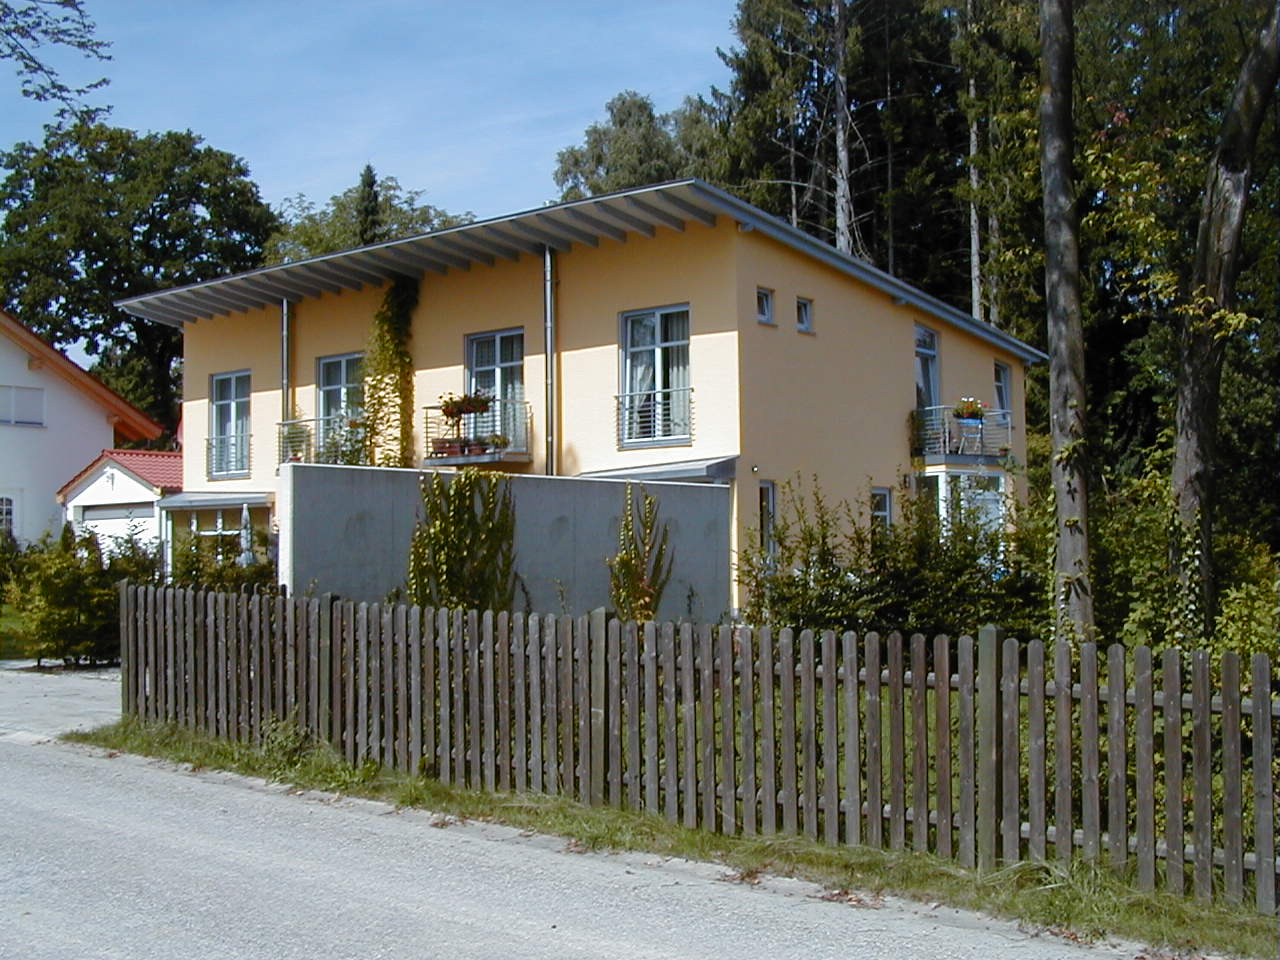 Doppelhaus in Riederau am Ammersee